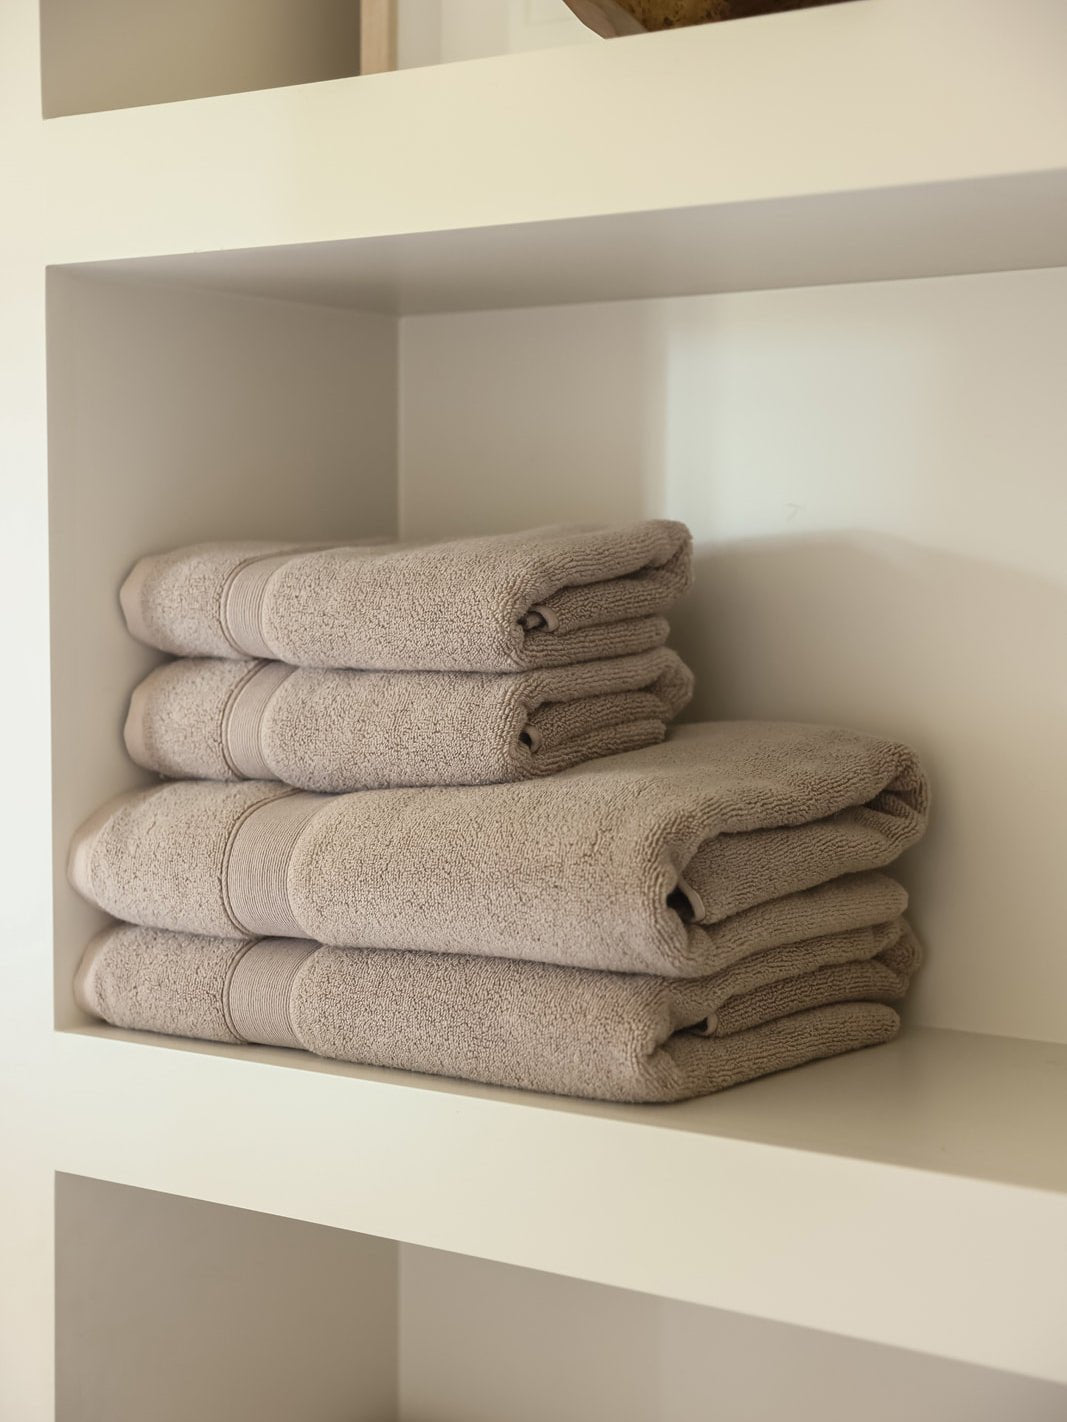 Sand hand towels and bath towels folded on shelf |Color:Sand